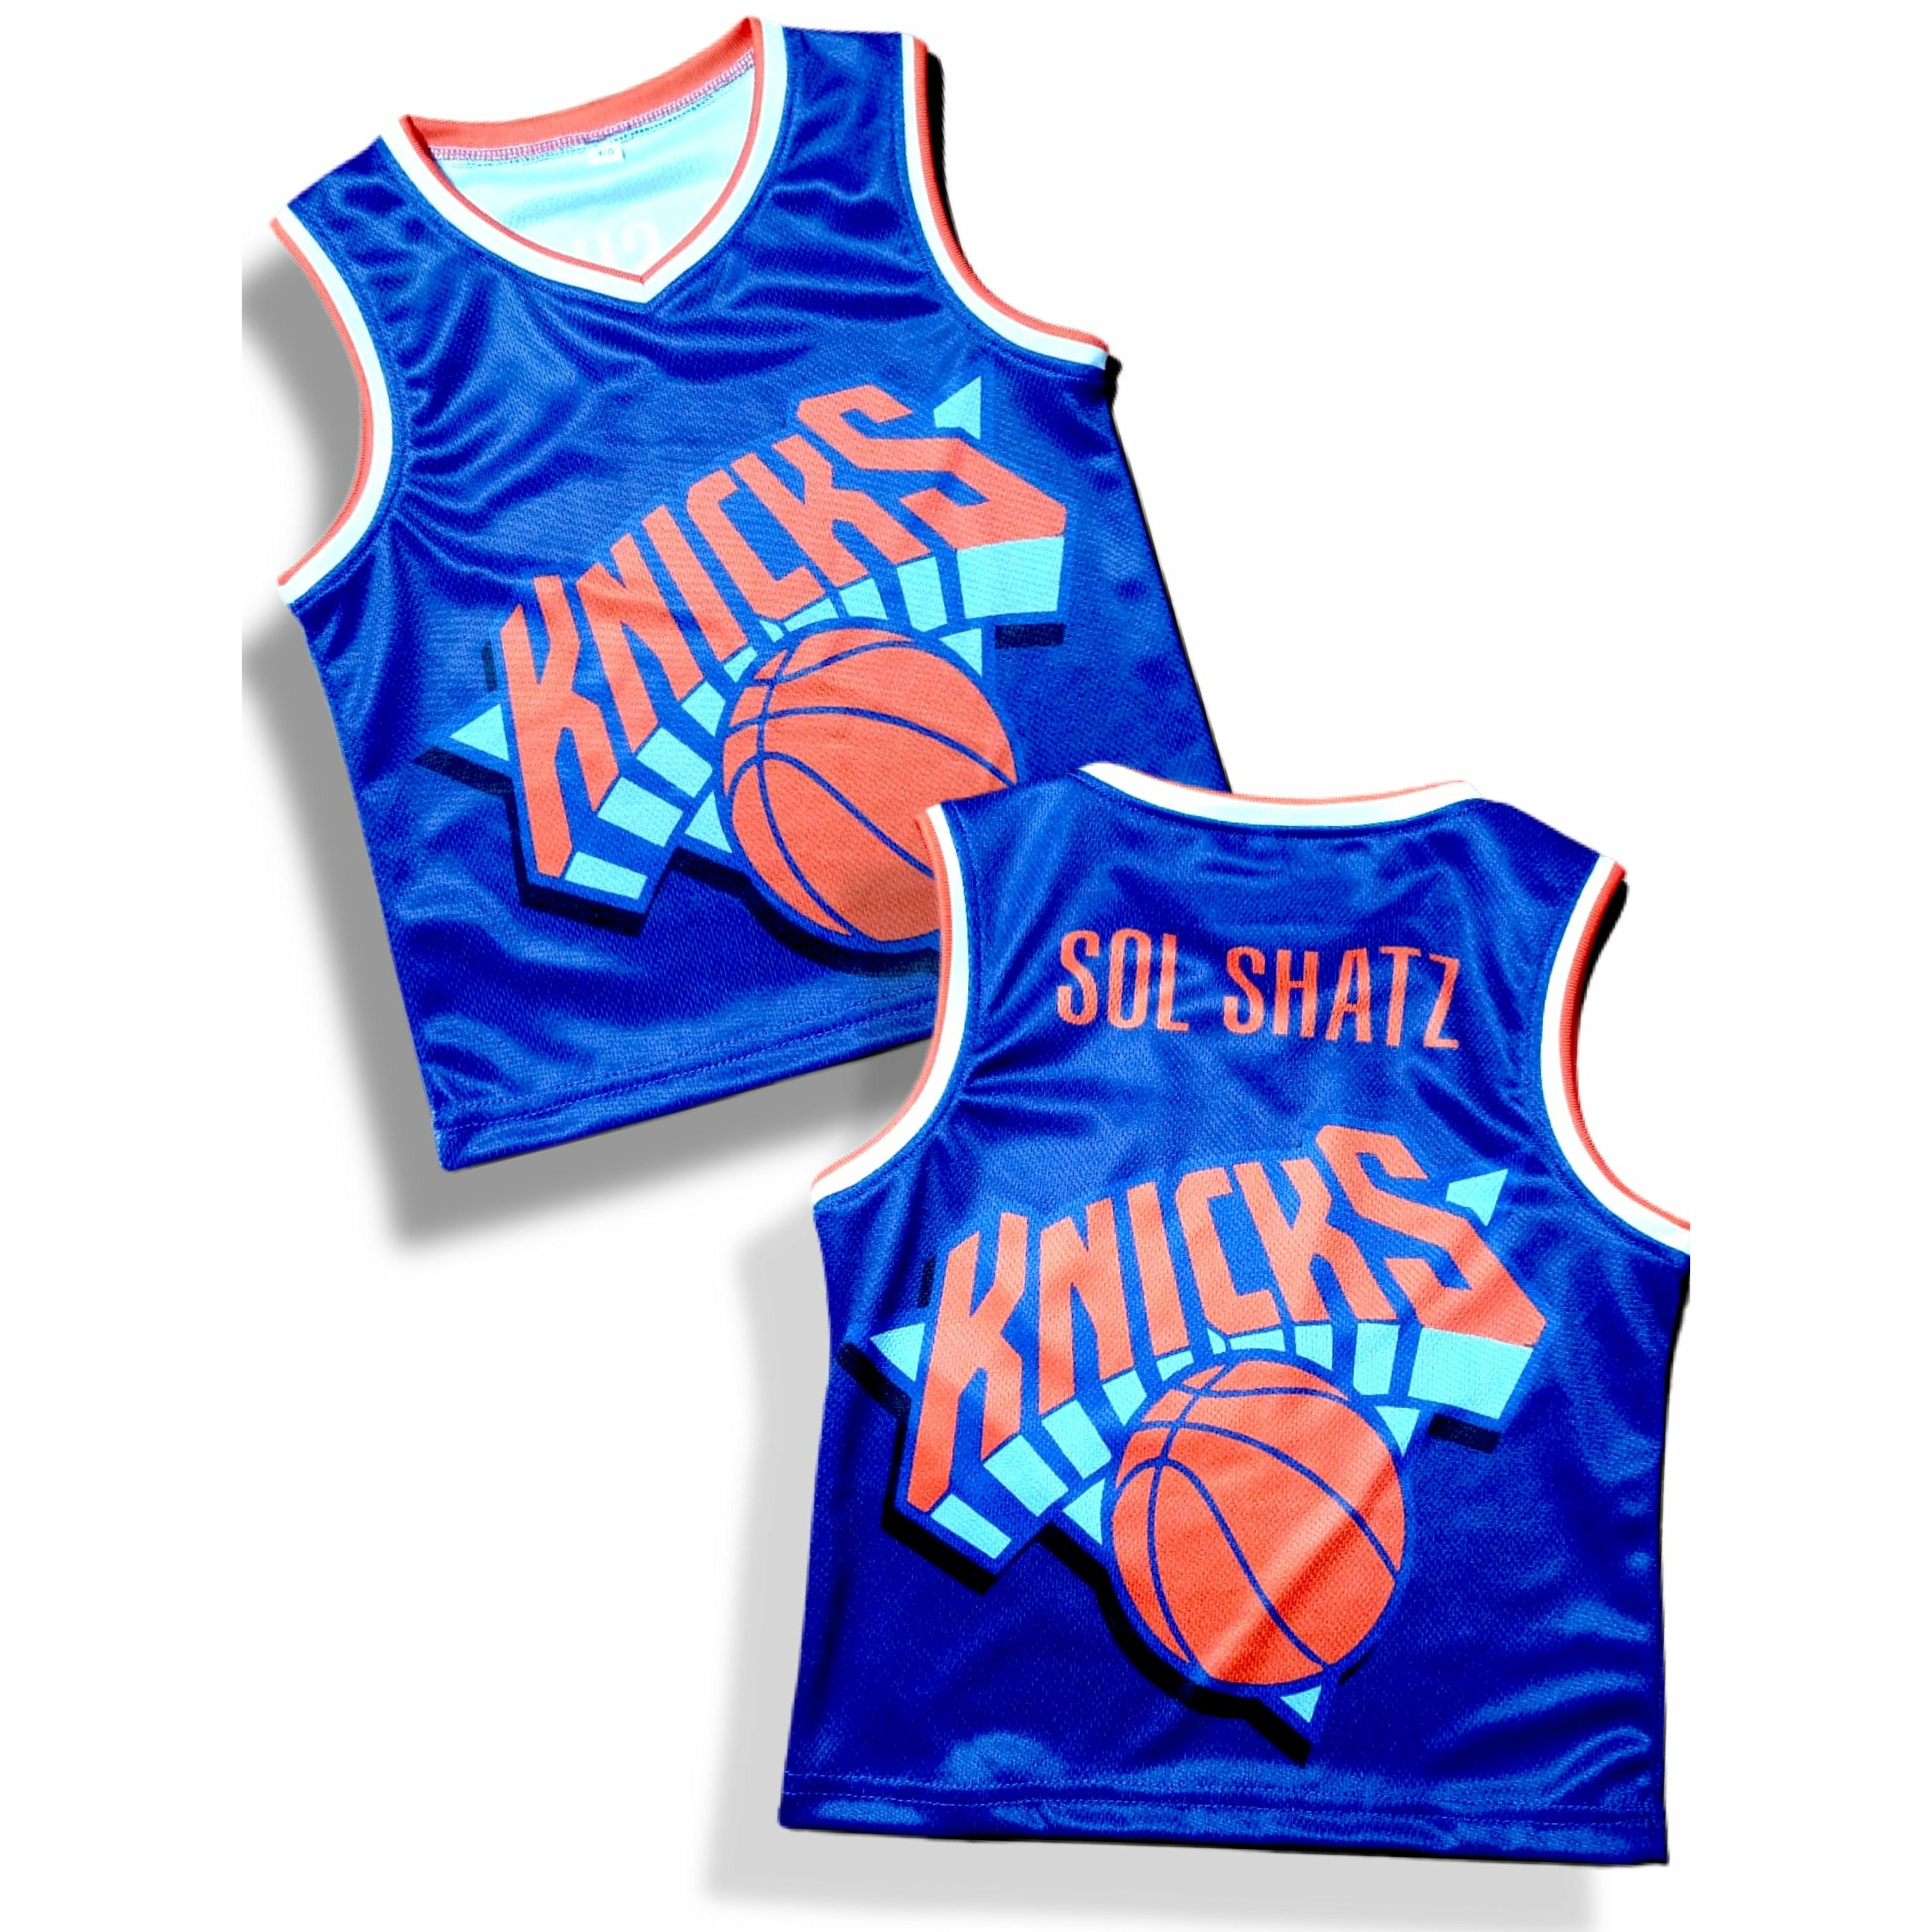 Knicks Kids Basketball jersey